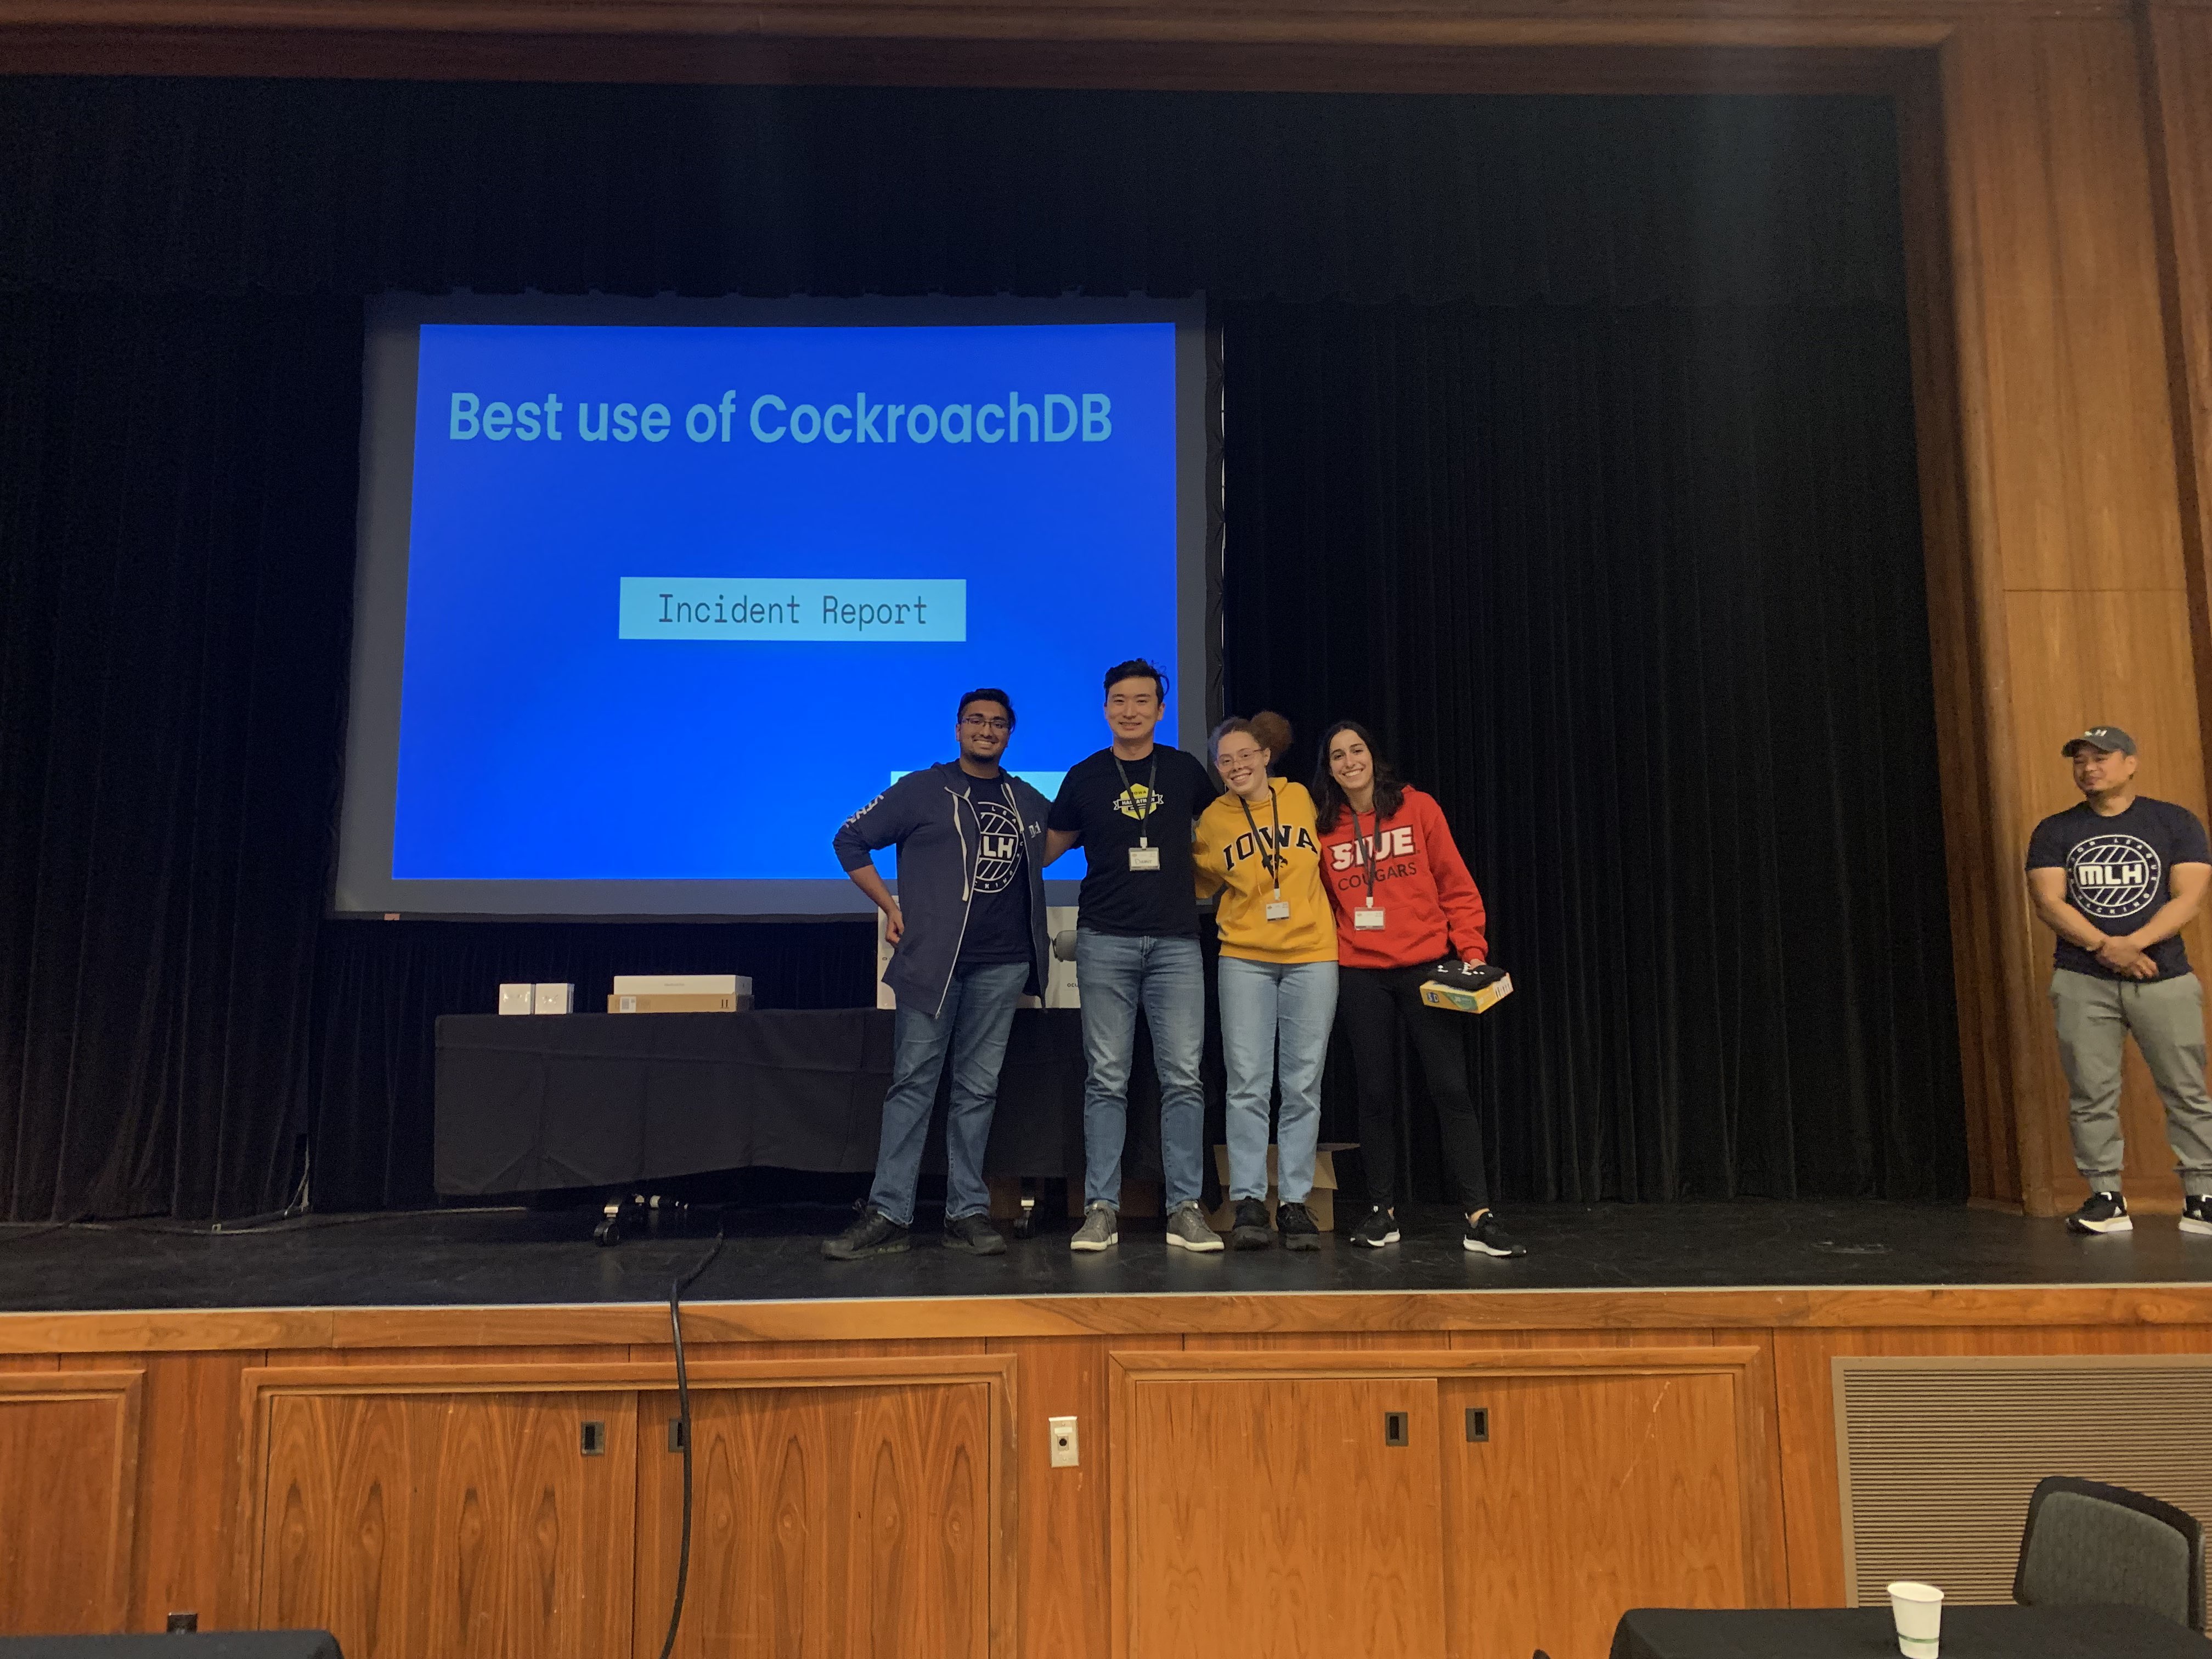 Us winning the CockroachDB category award